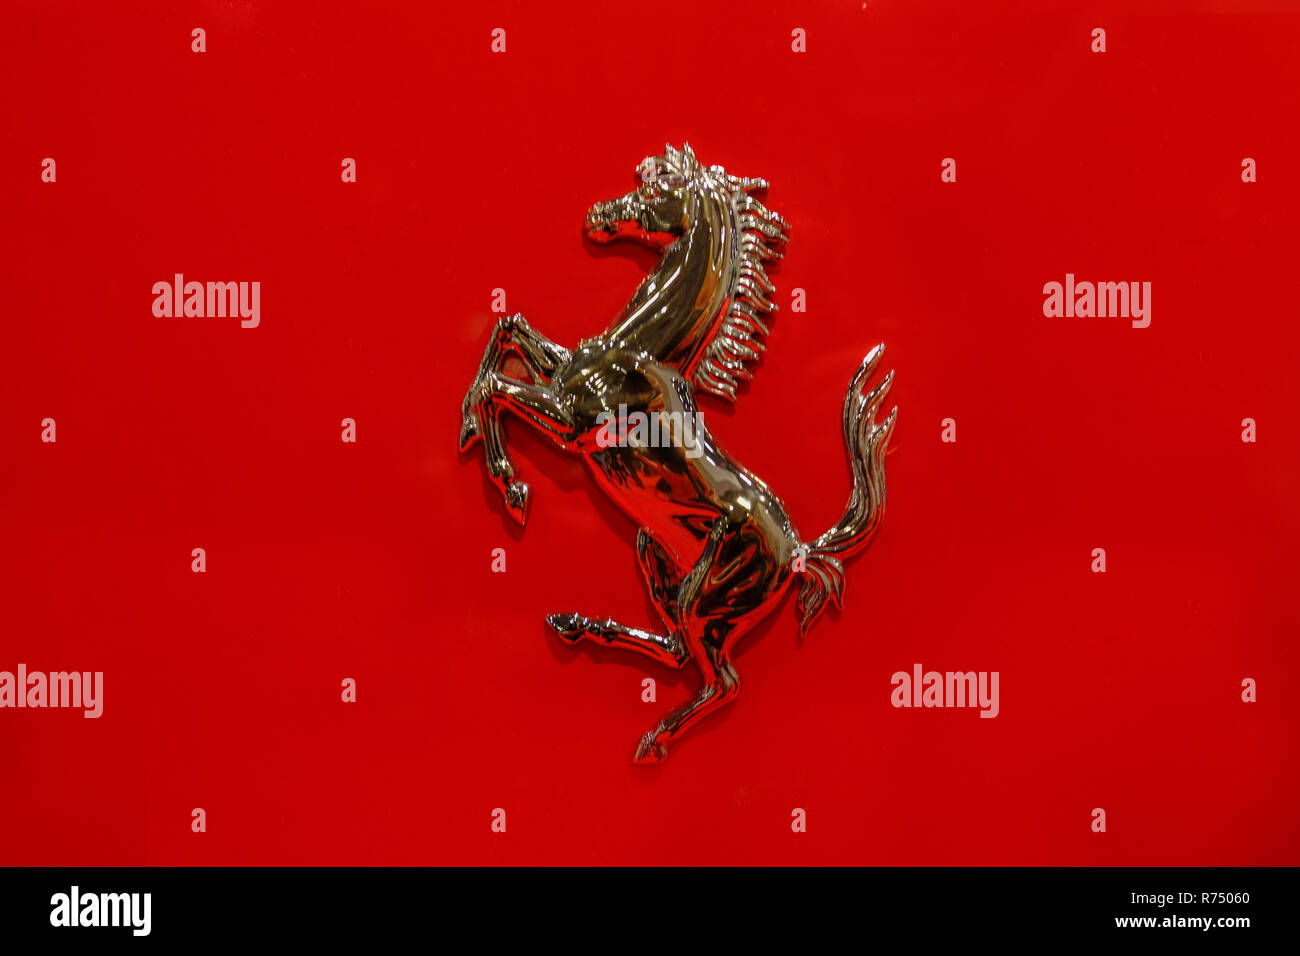 London, UK - February 16, 2018: Closeup of horse rearing up on a red background.  Ferarri iconic car symbol. Stock Photo